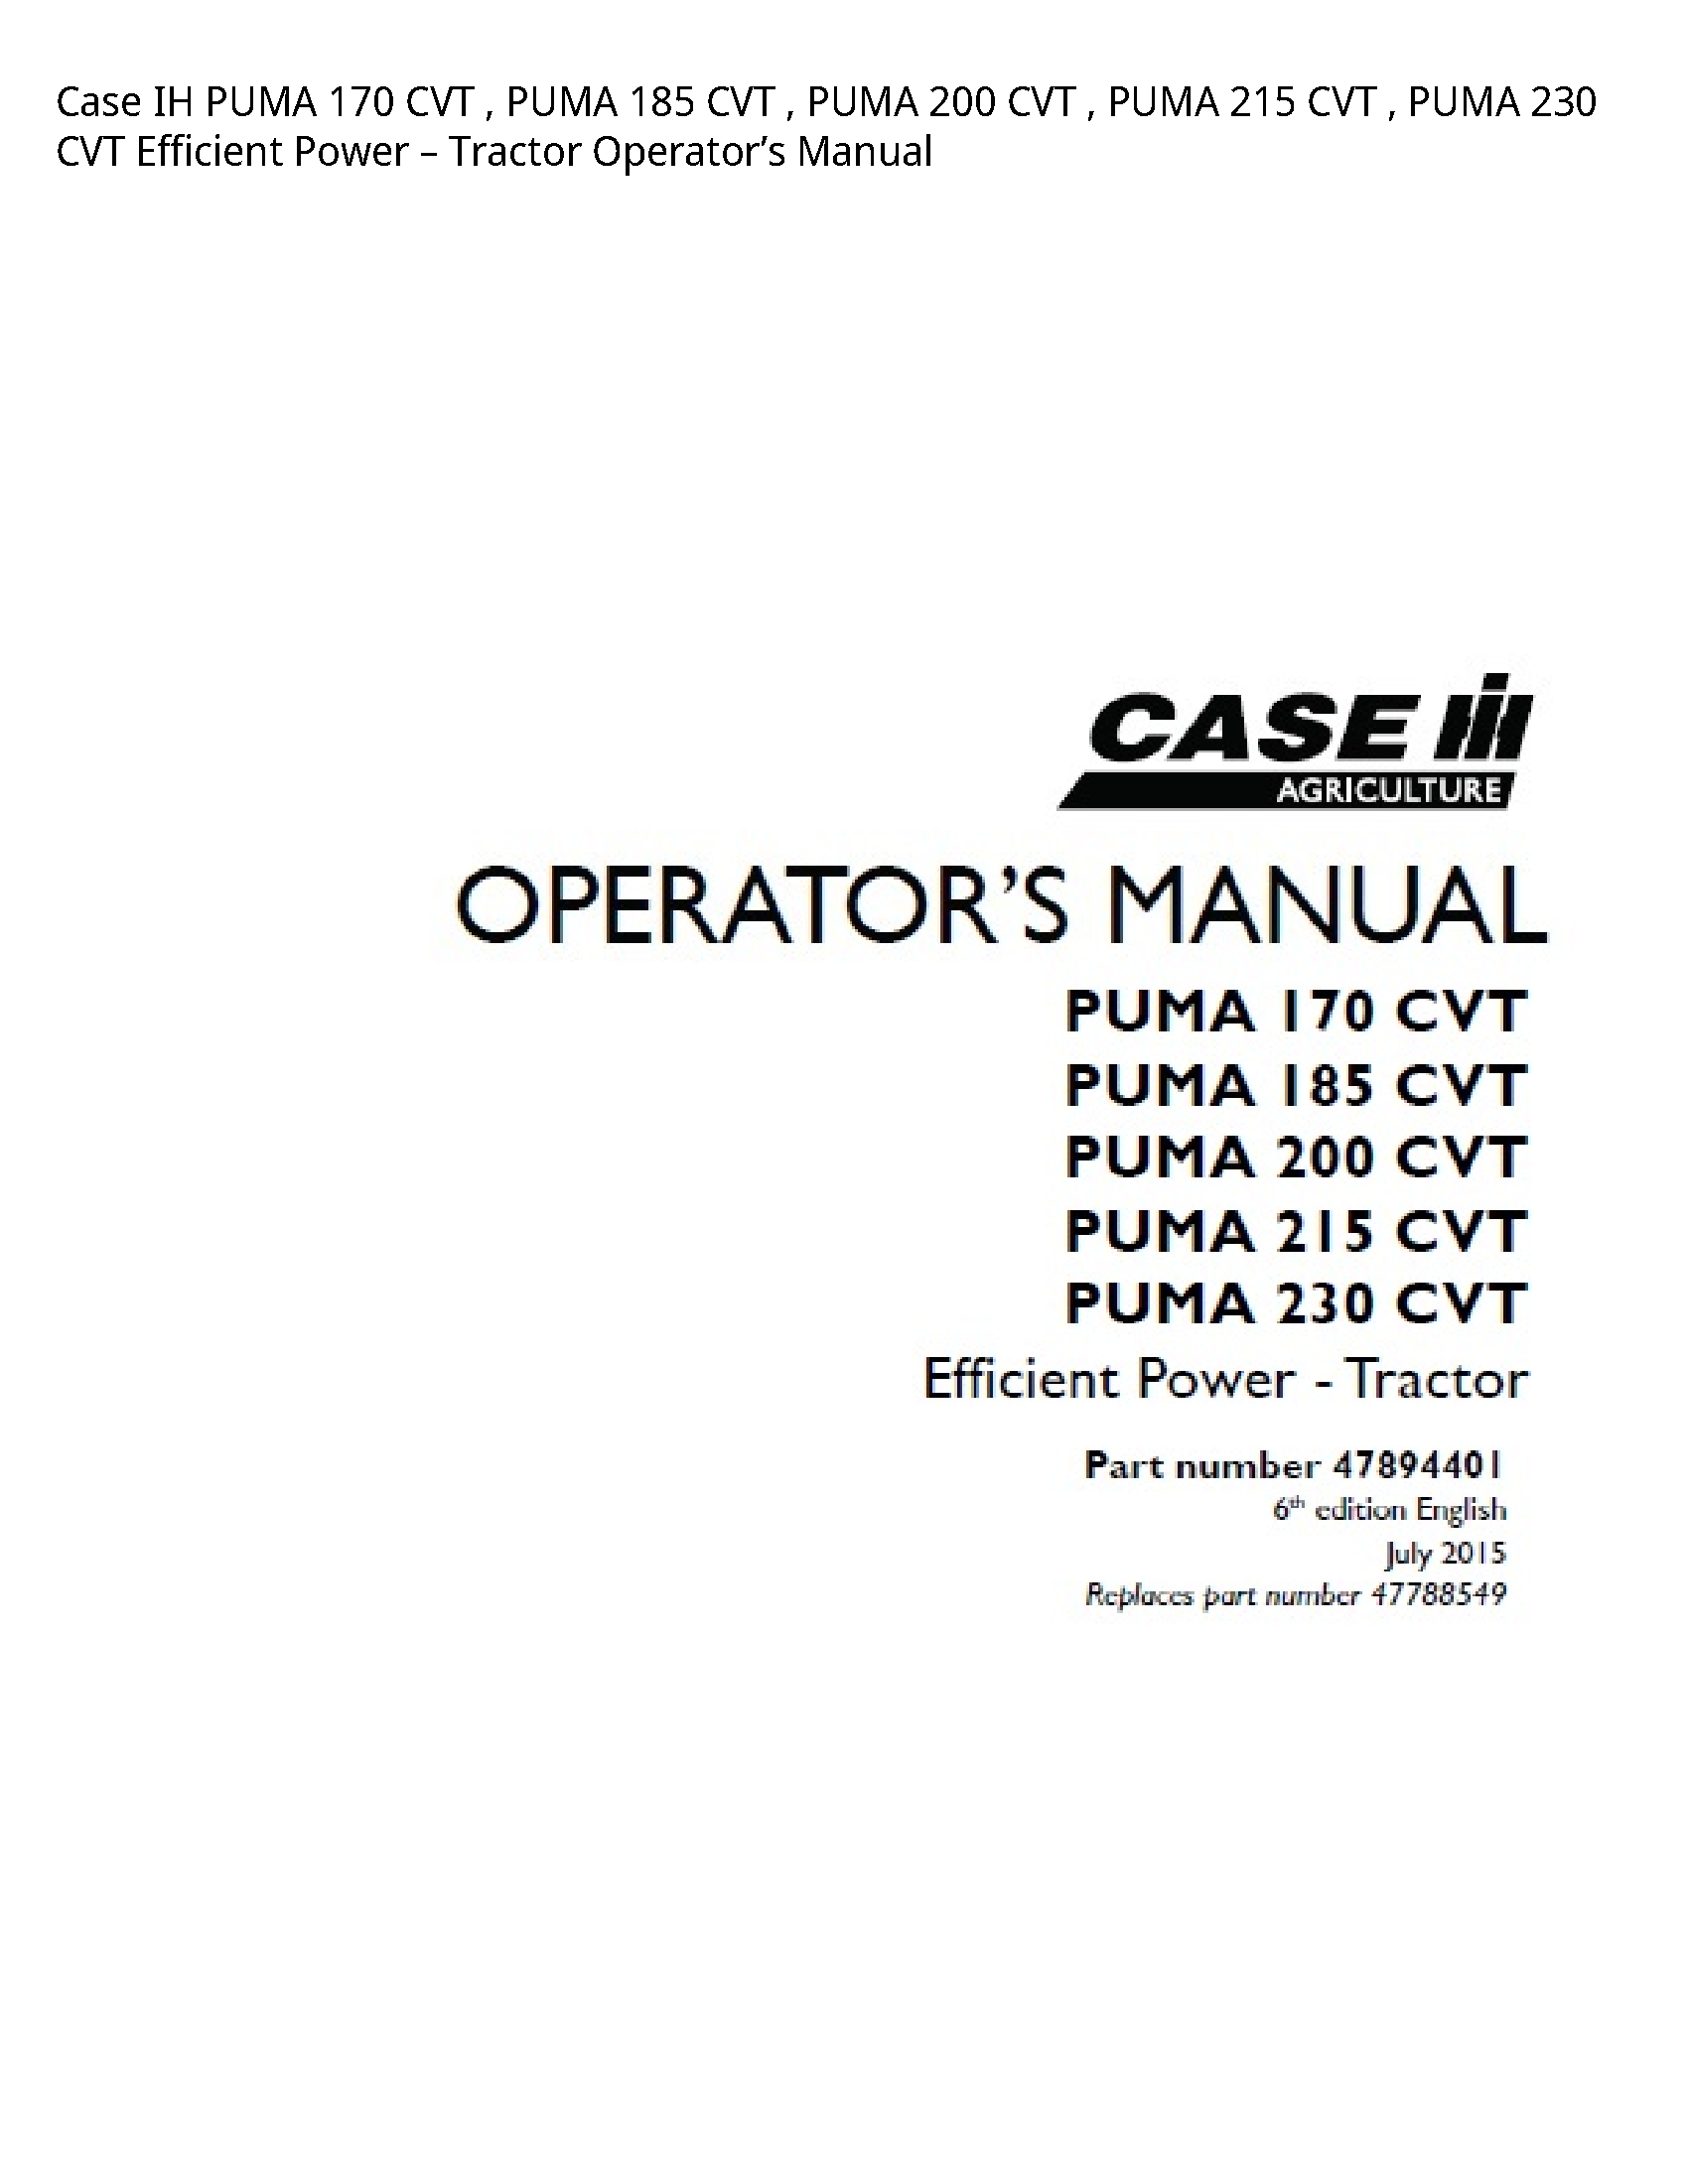 Case/Case IH 170 IH PUMA CVT PUMA CVT PUMA CVT PUMA CVT PUMA CVT Efficient Power Tractor Operator’s manual